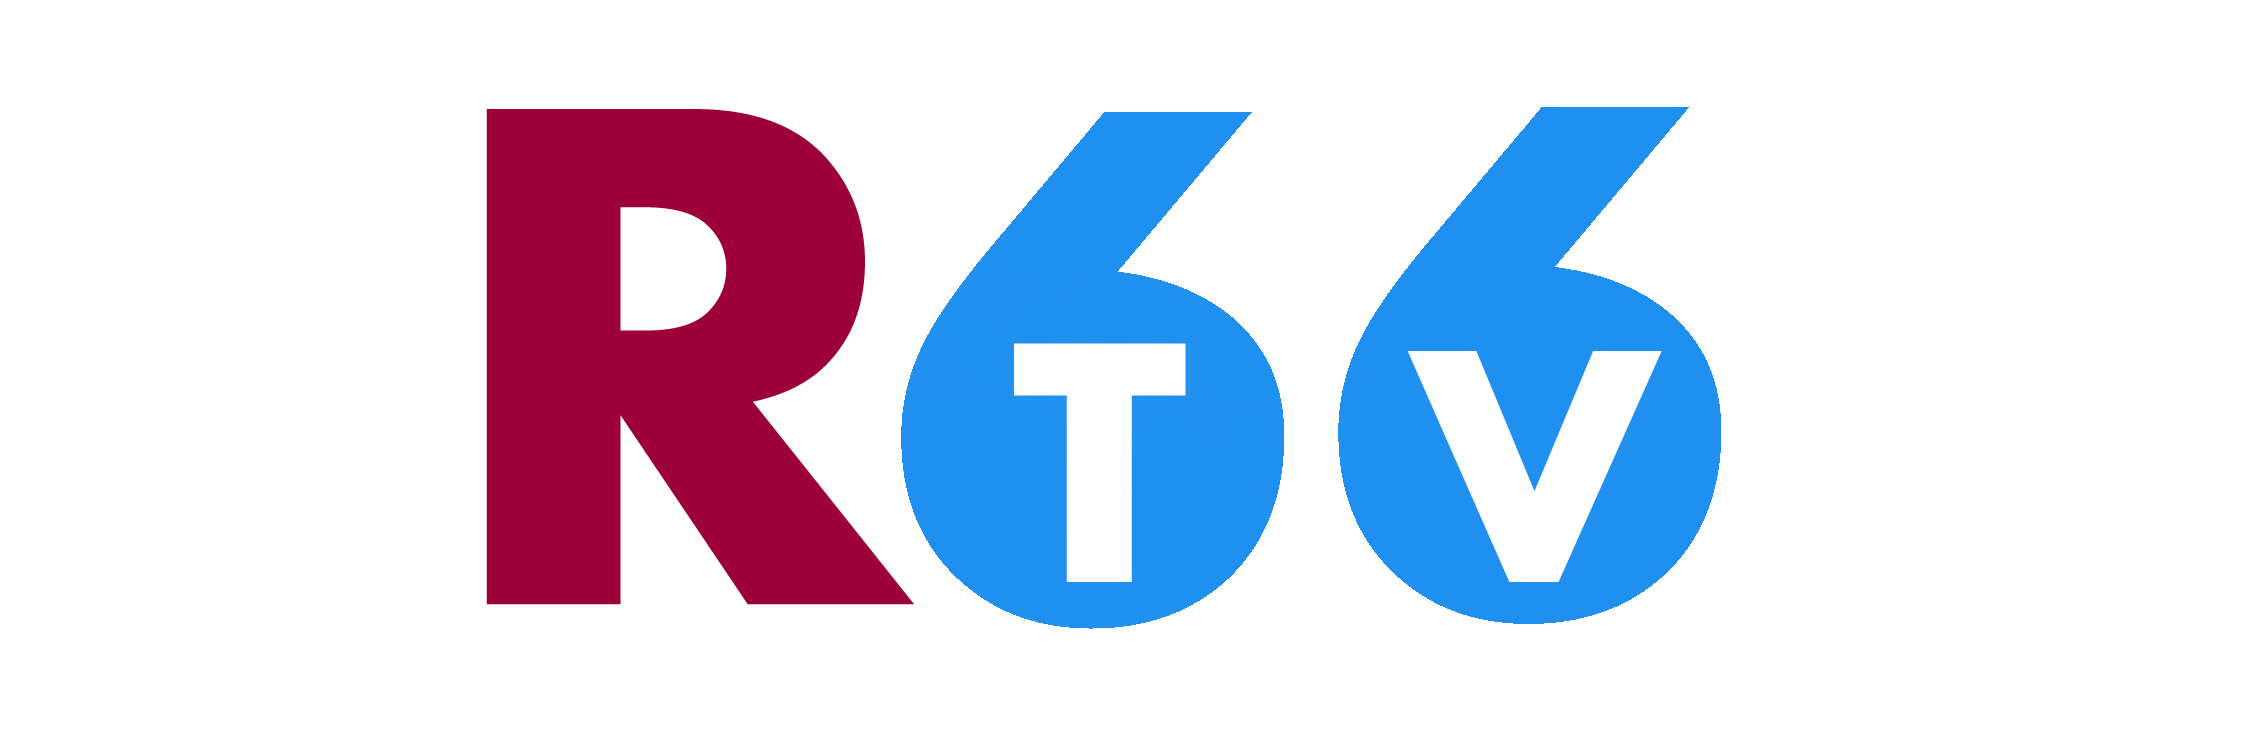 Rtv66 TV - Radyo TV 66